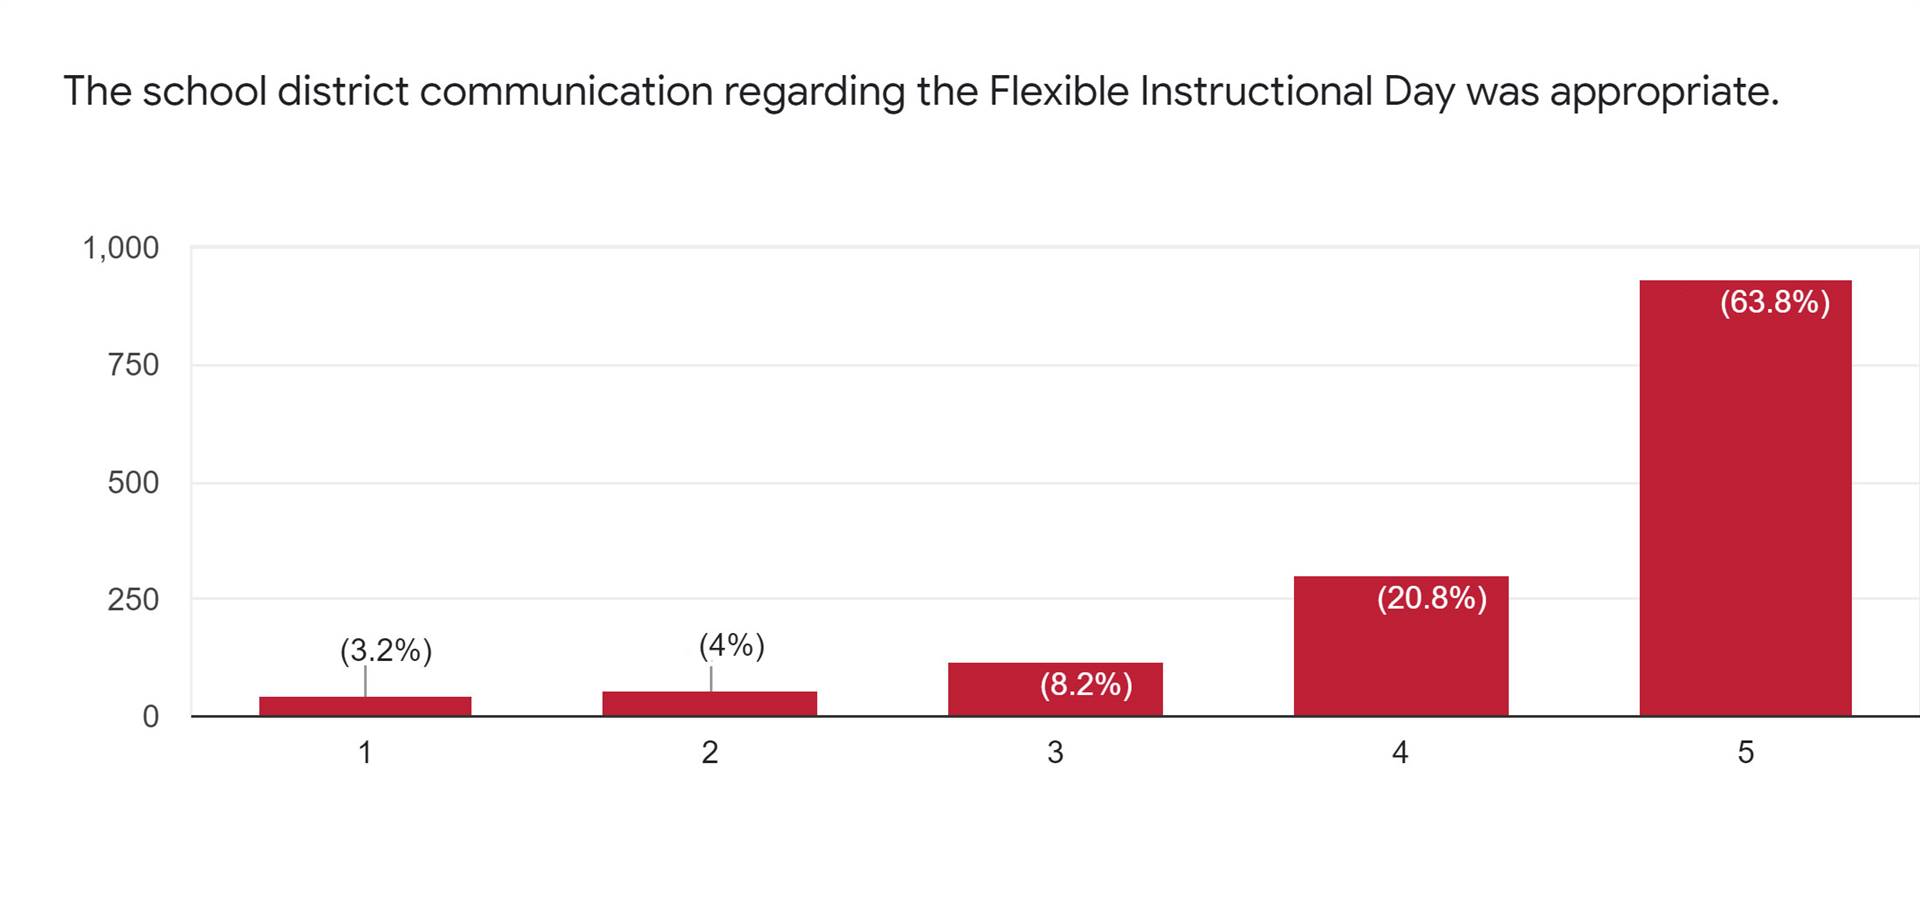 FID Survey Slide 6 - "The school district communication regarding the Flexible Instructional Day was